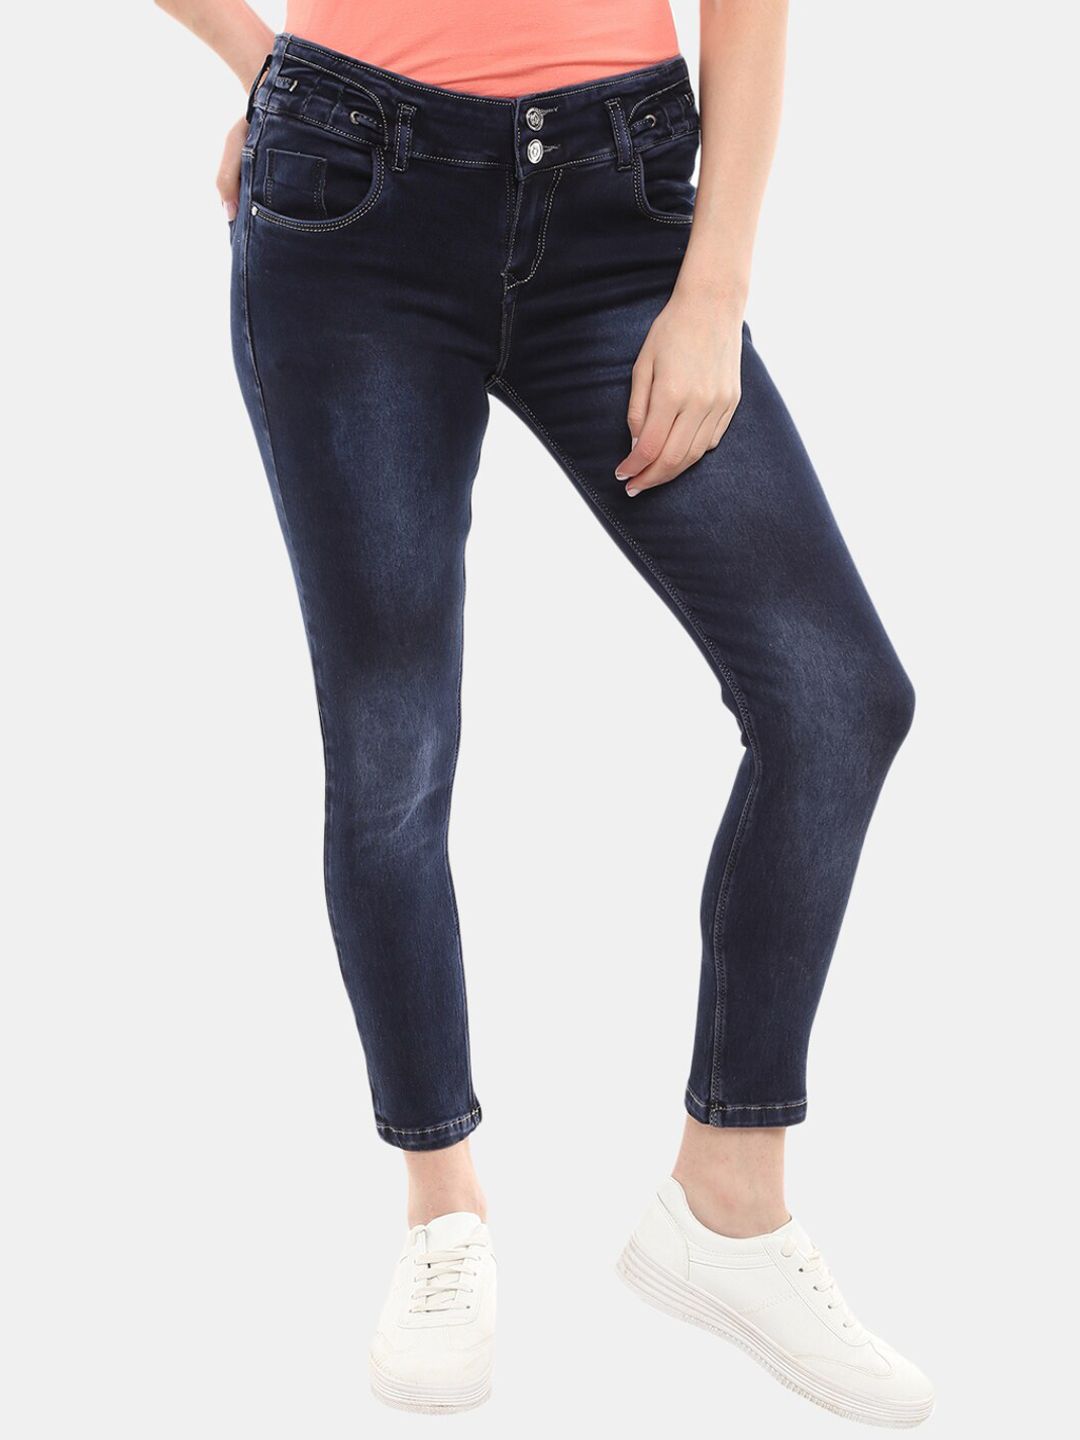 V-Mart Women Blue Light Fade Regular Fit Jeans Price in India